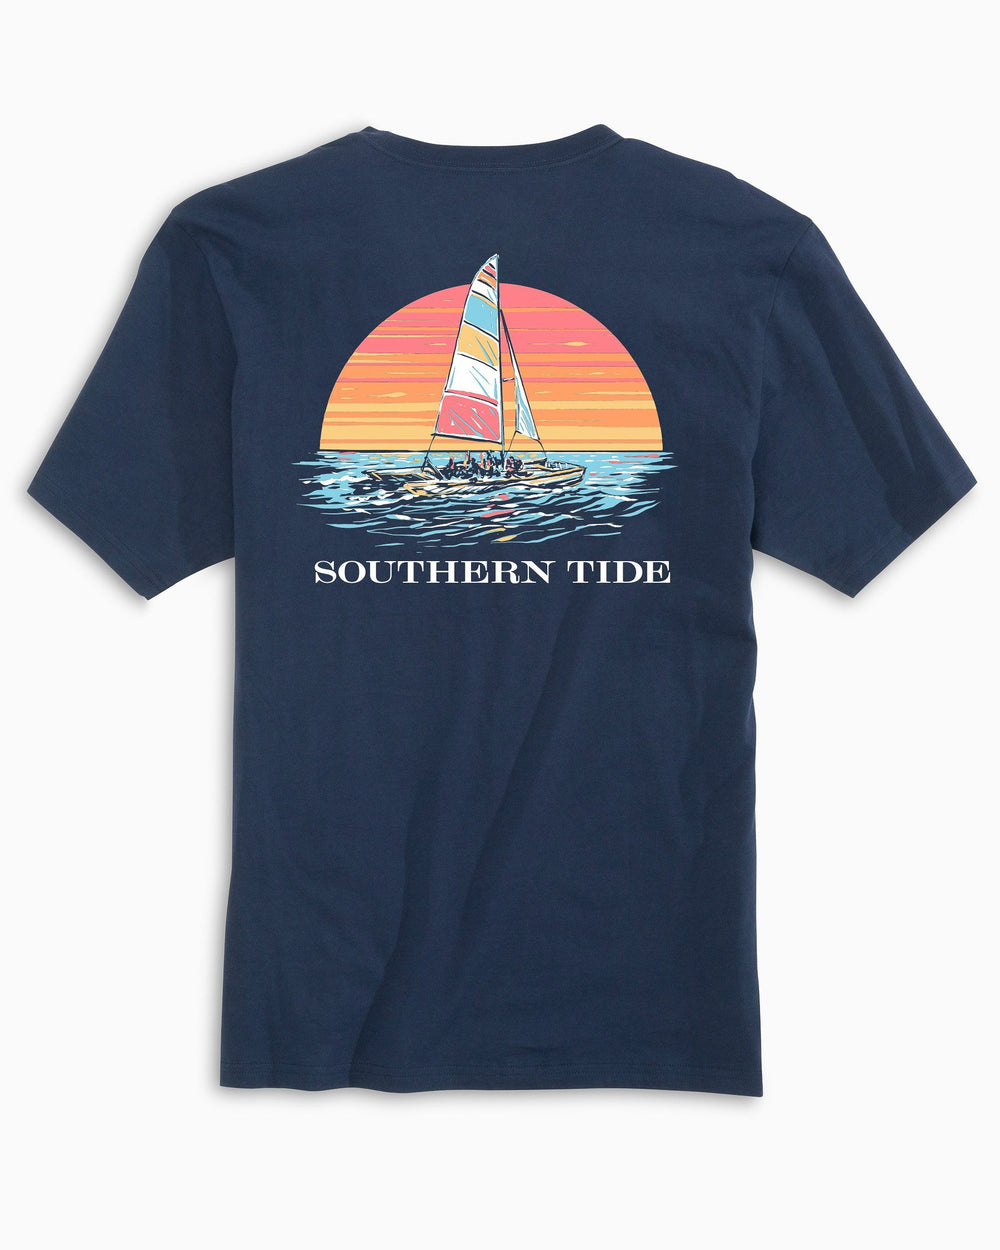 Sunset Silhouette T-Shirt